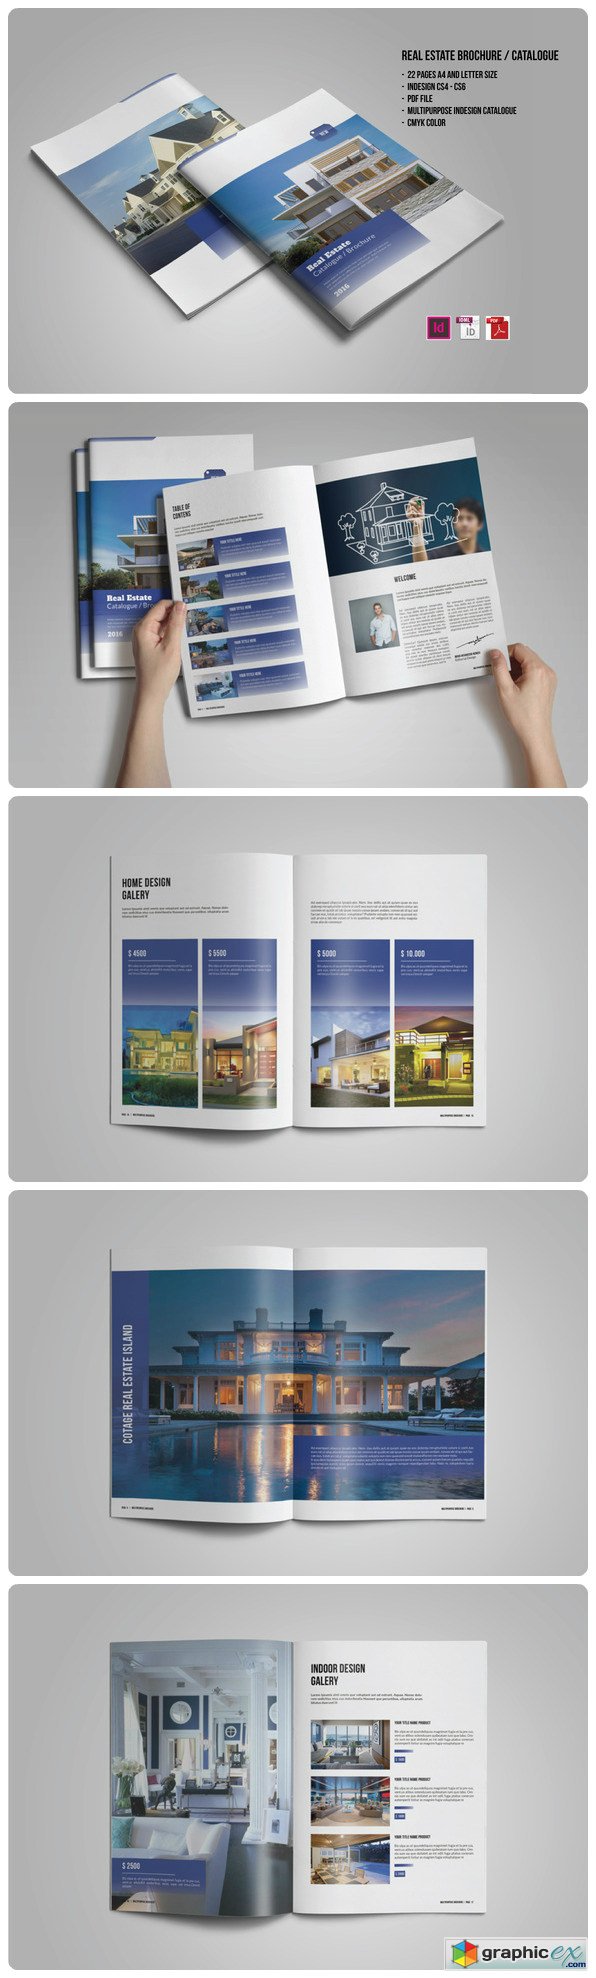 Real Estate Catalogue / Brochure